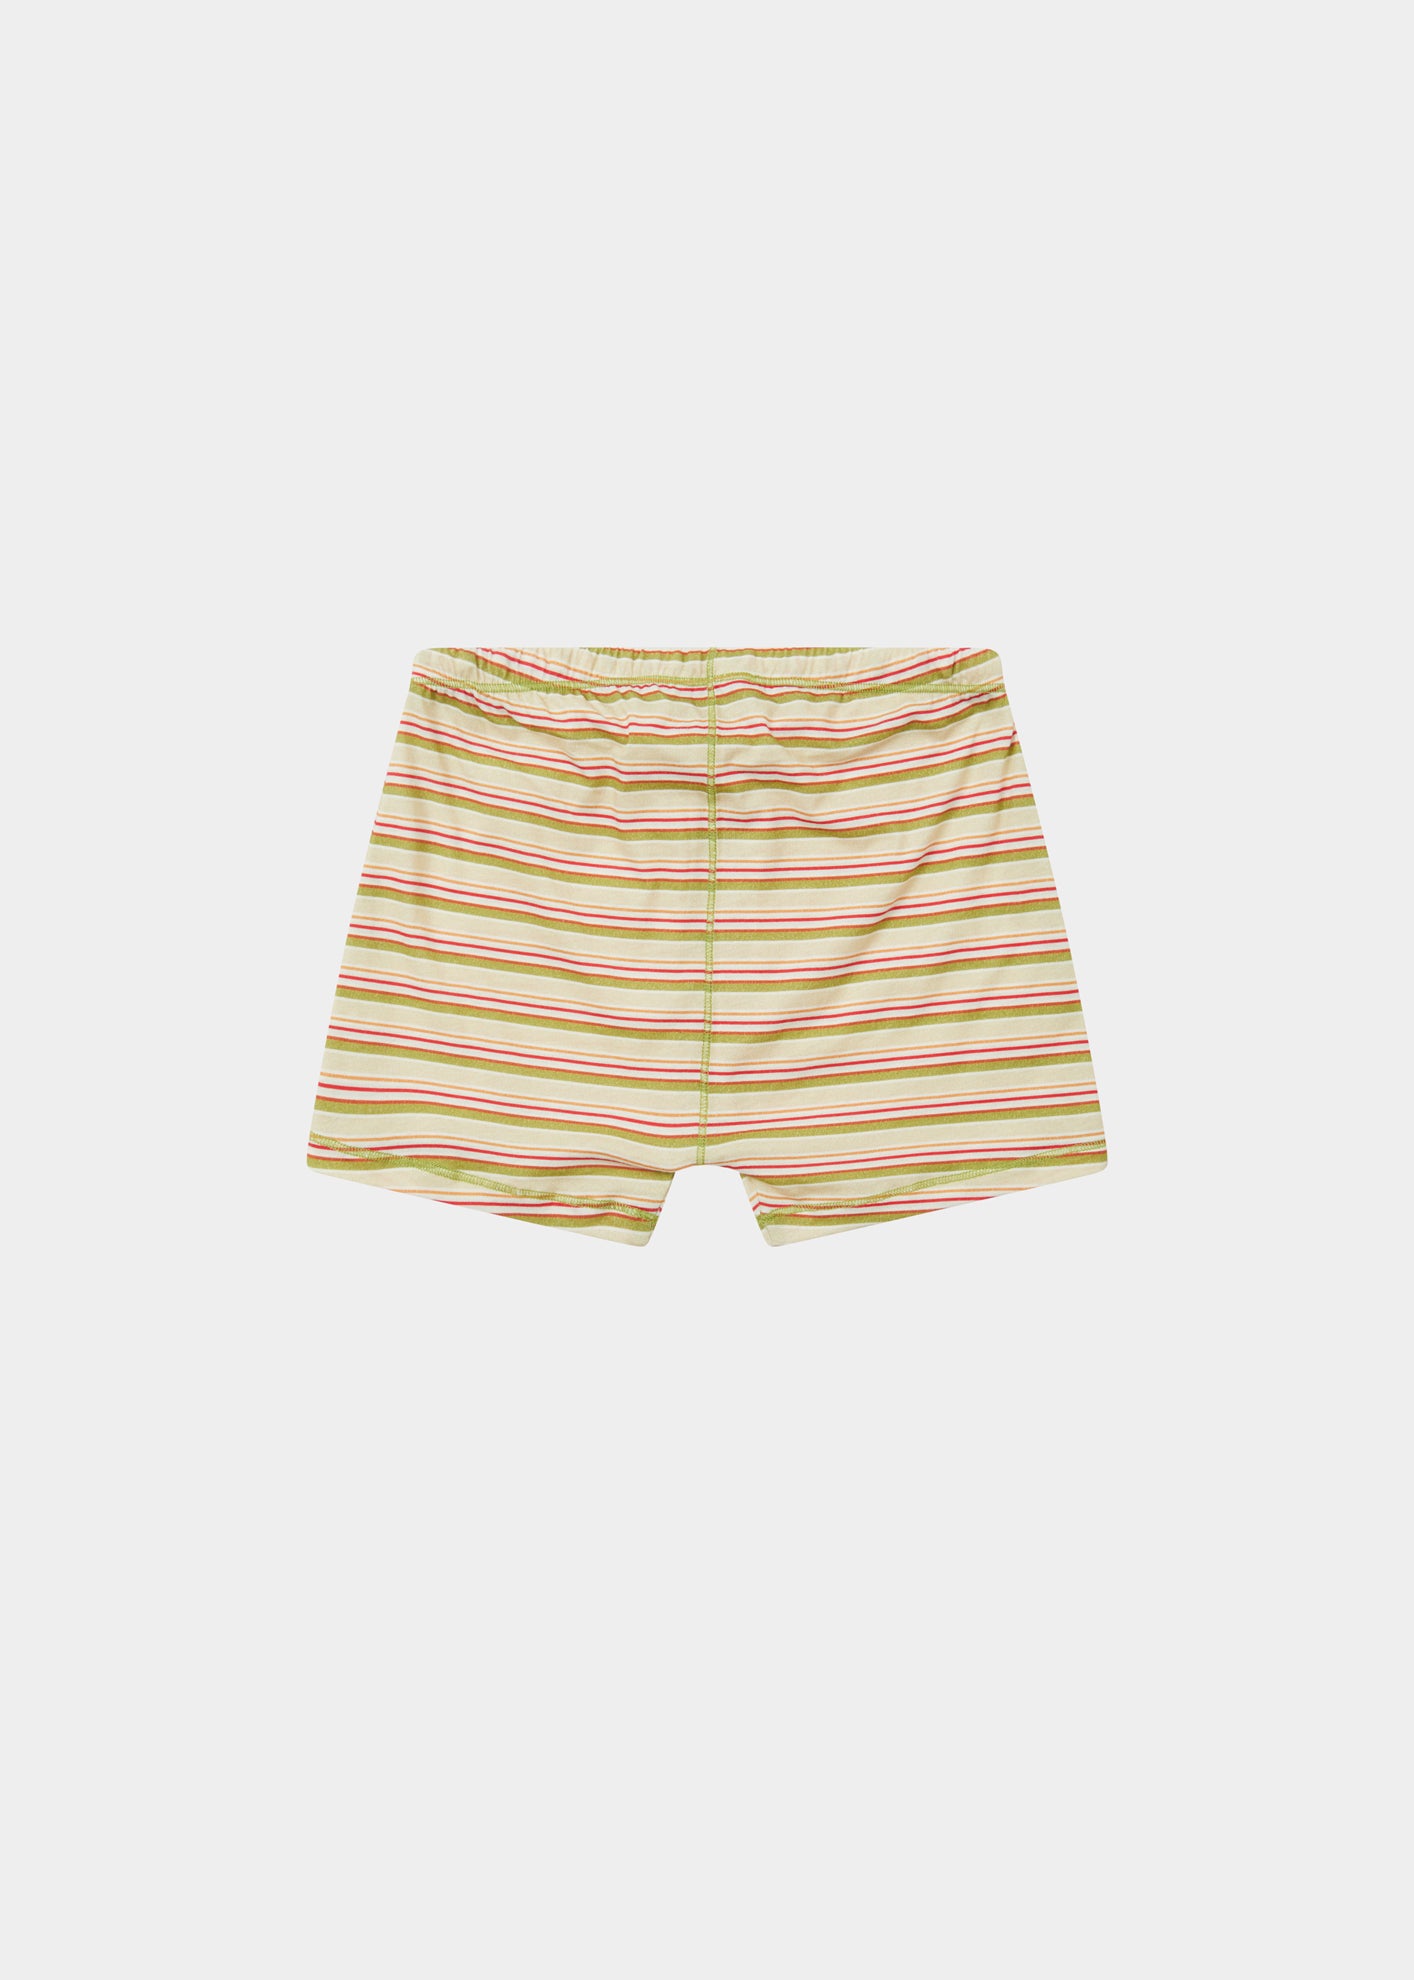 Children Designer Sportswear - Alyxia Shorts - Multi Stripe